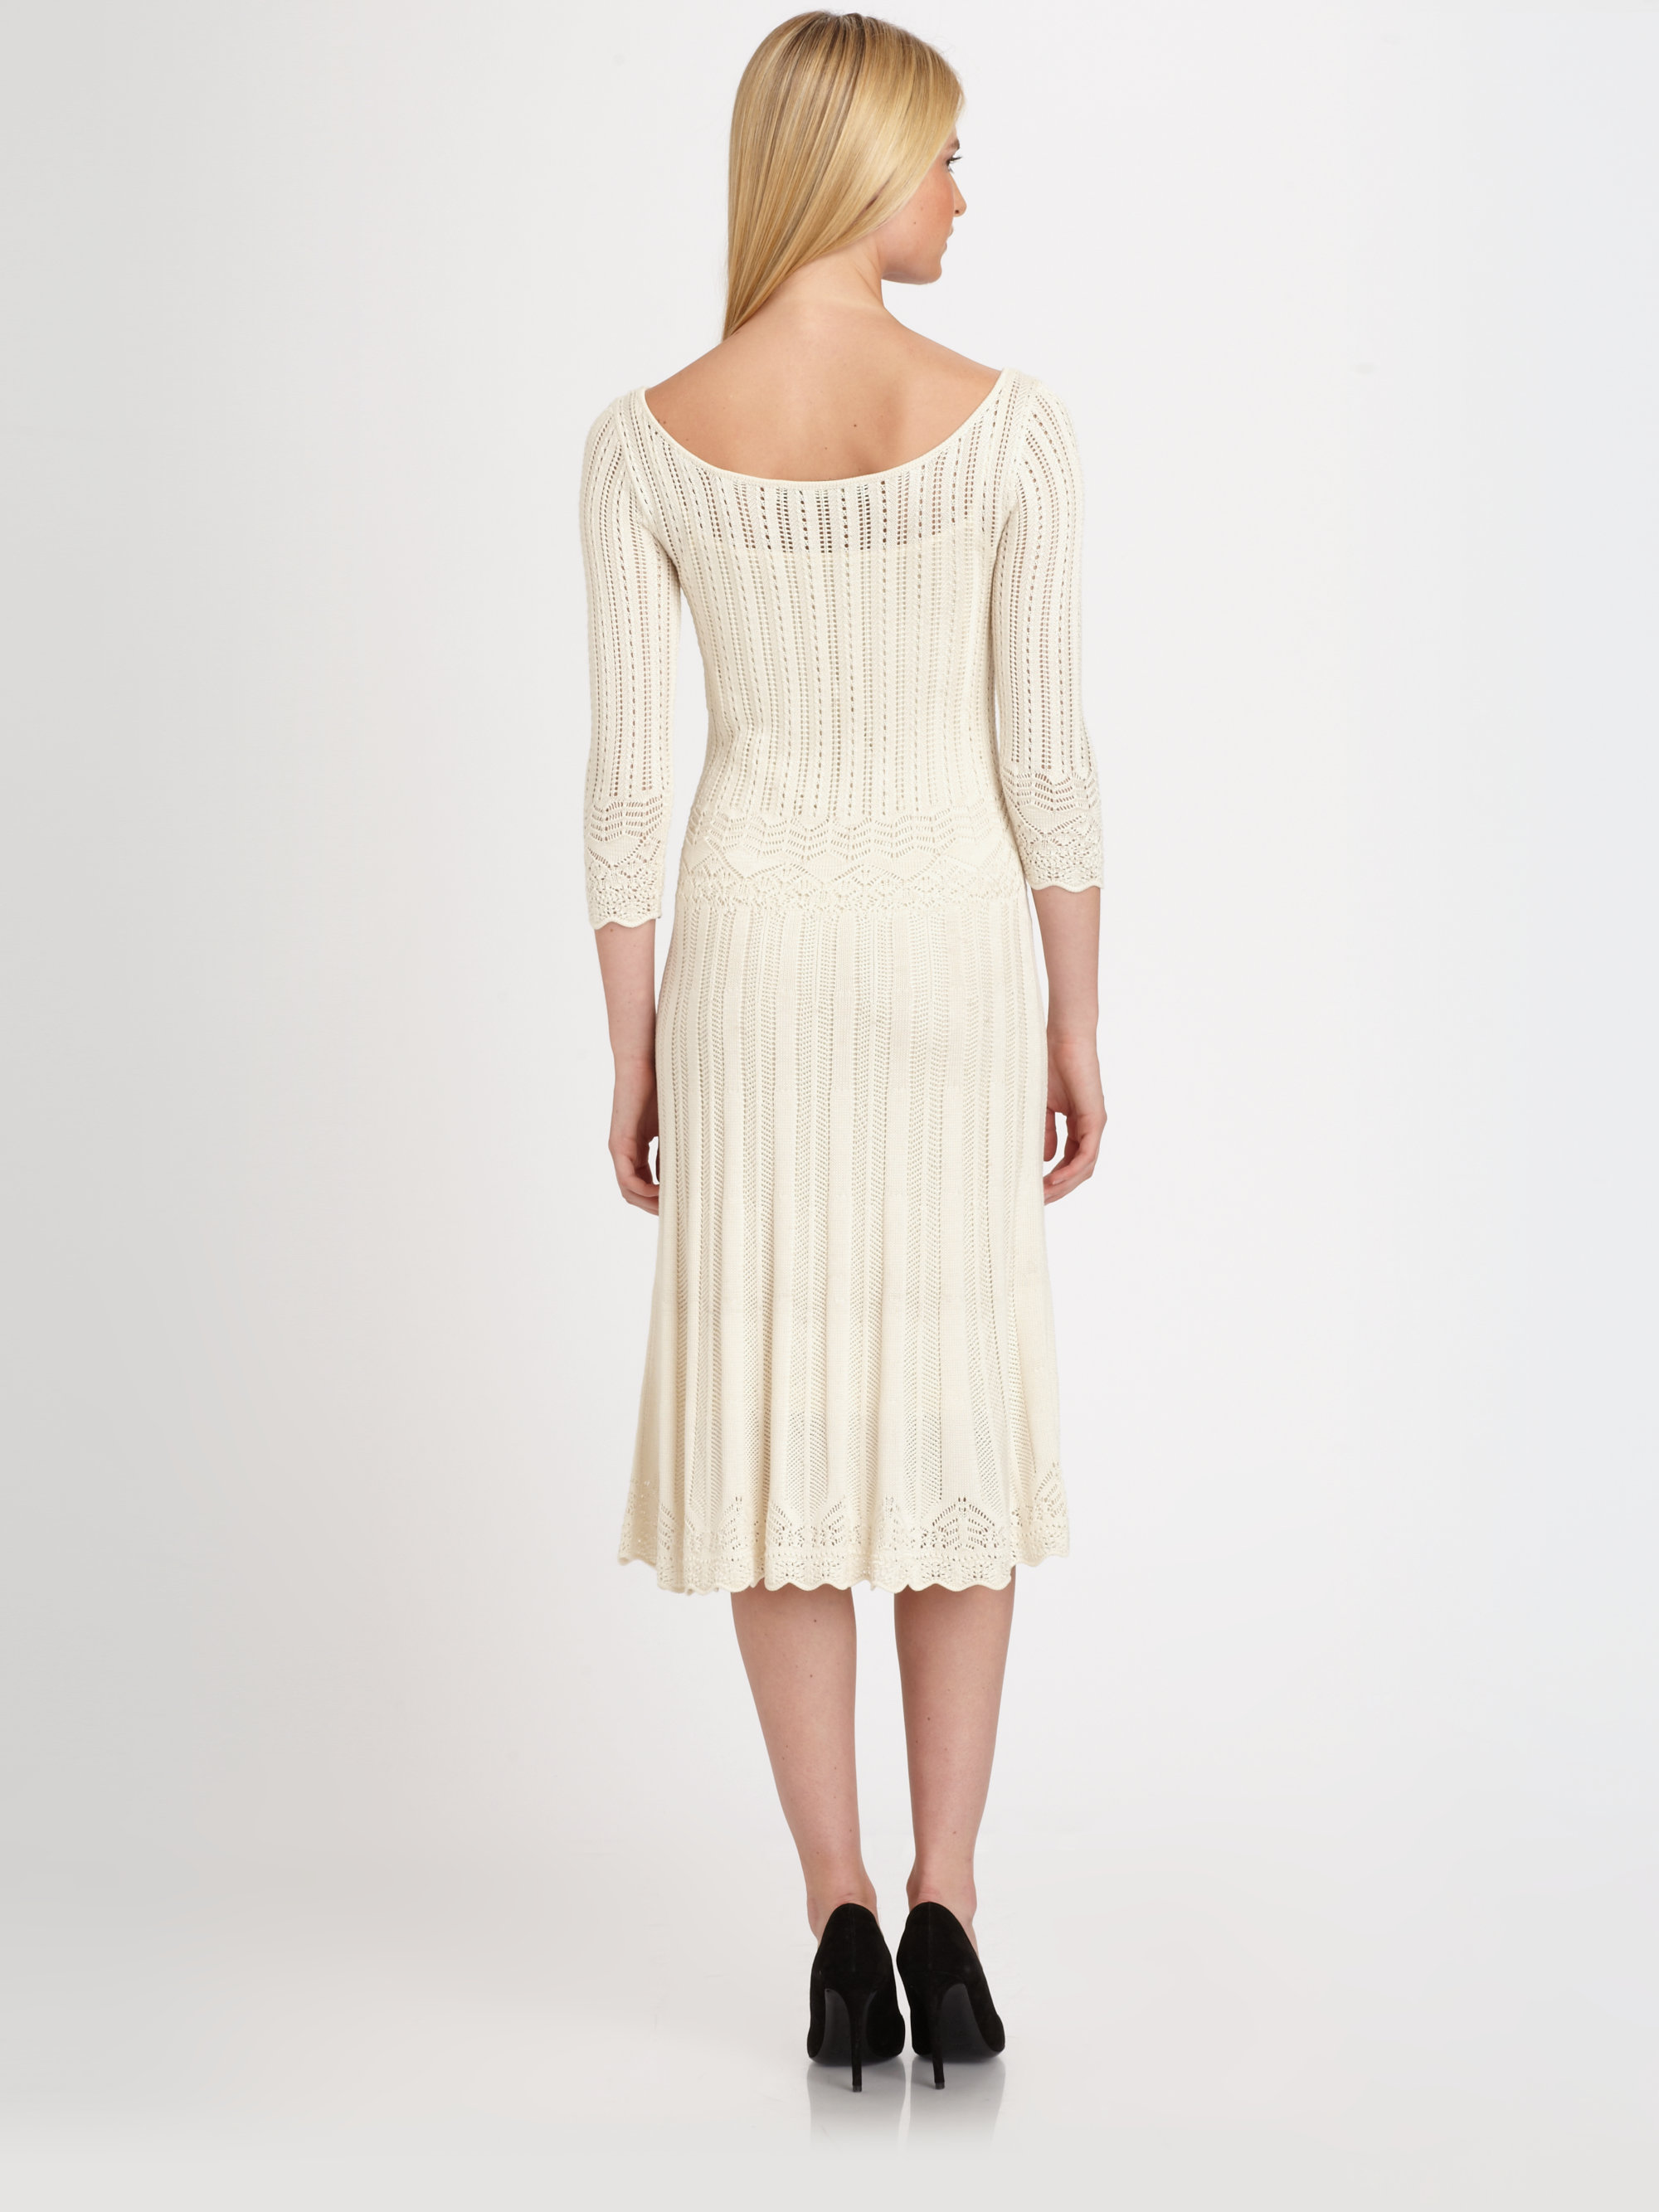 Lyst Ralph Lauren Black Label Silk Knit Lace Dress In White